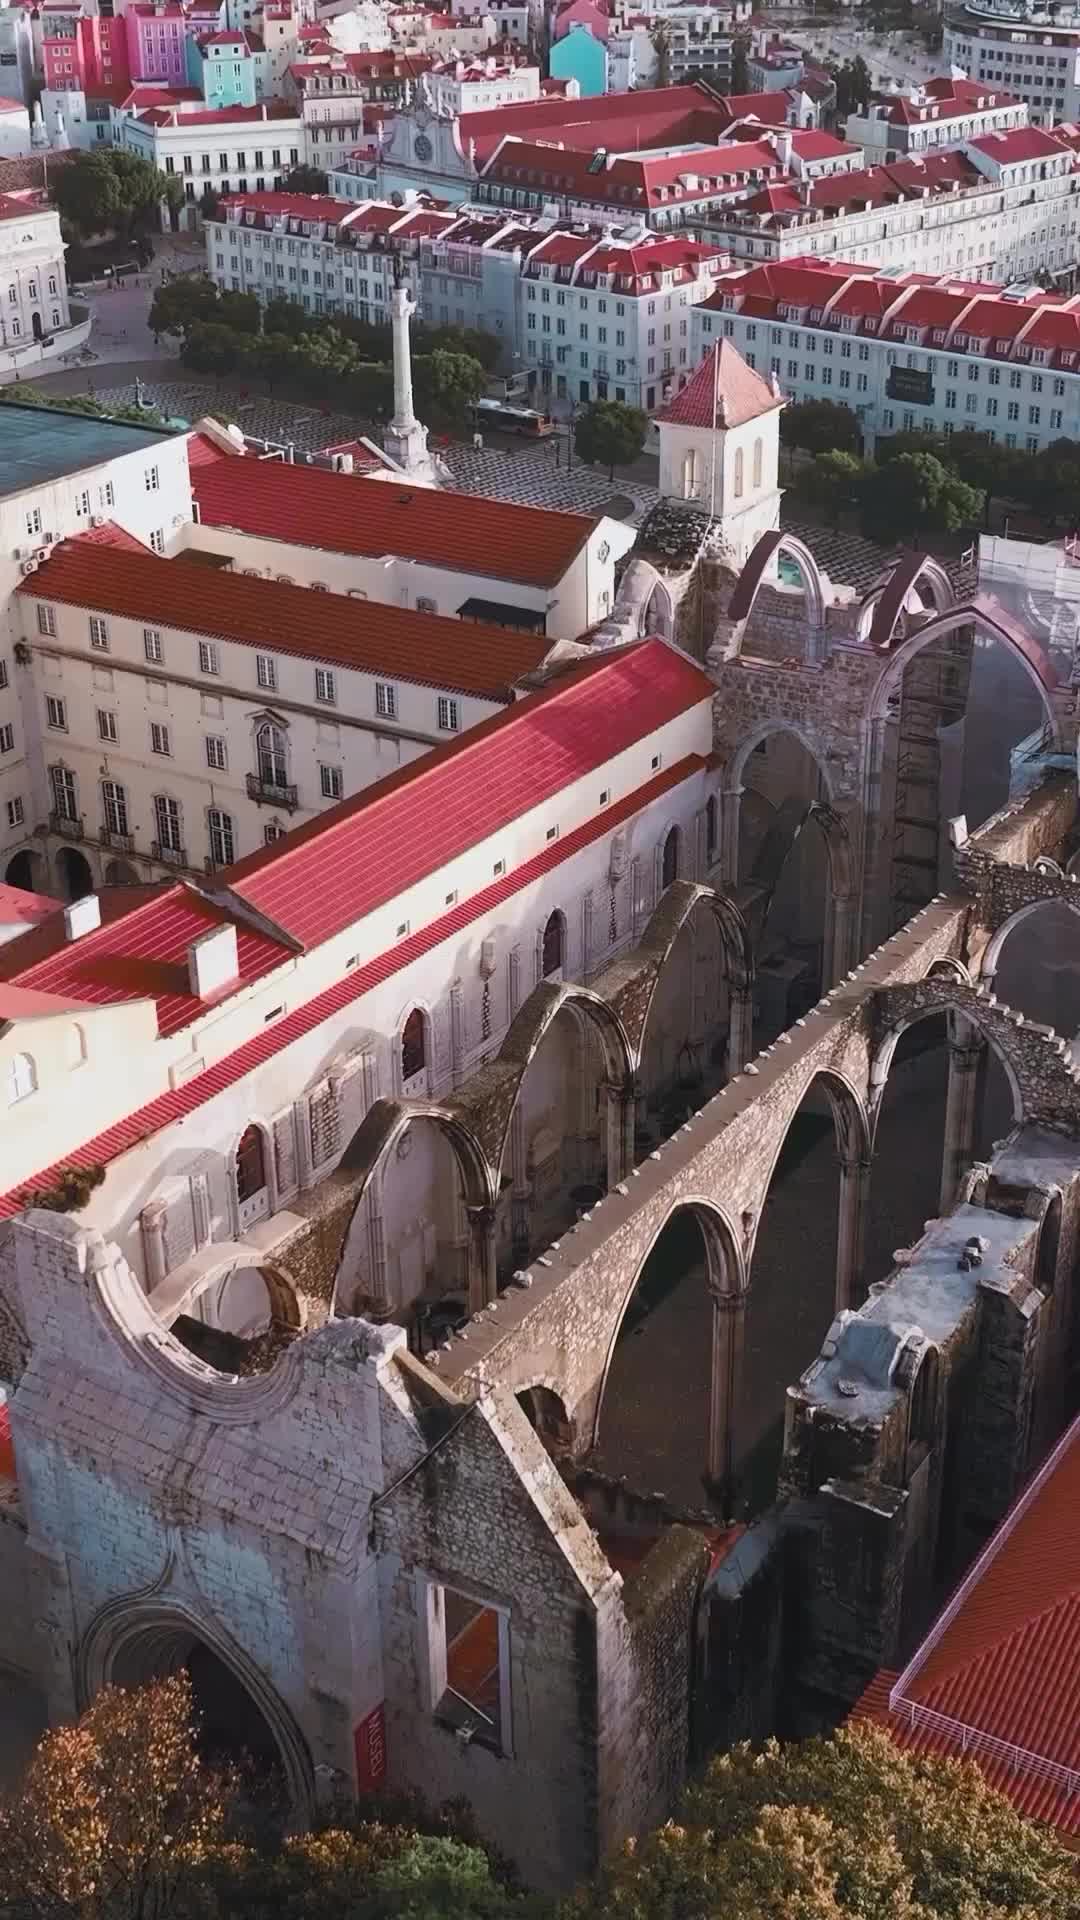 Discover Convento do Carmo: Lisbon's Architectural Gem